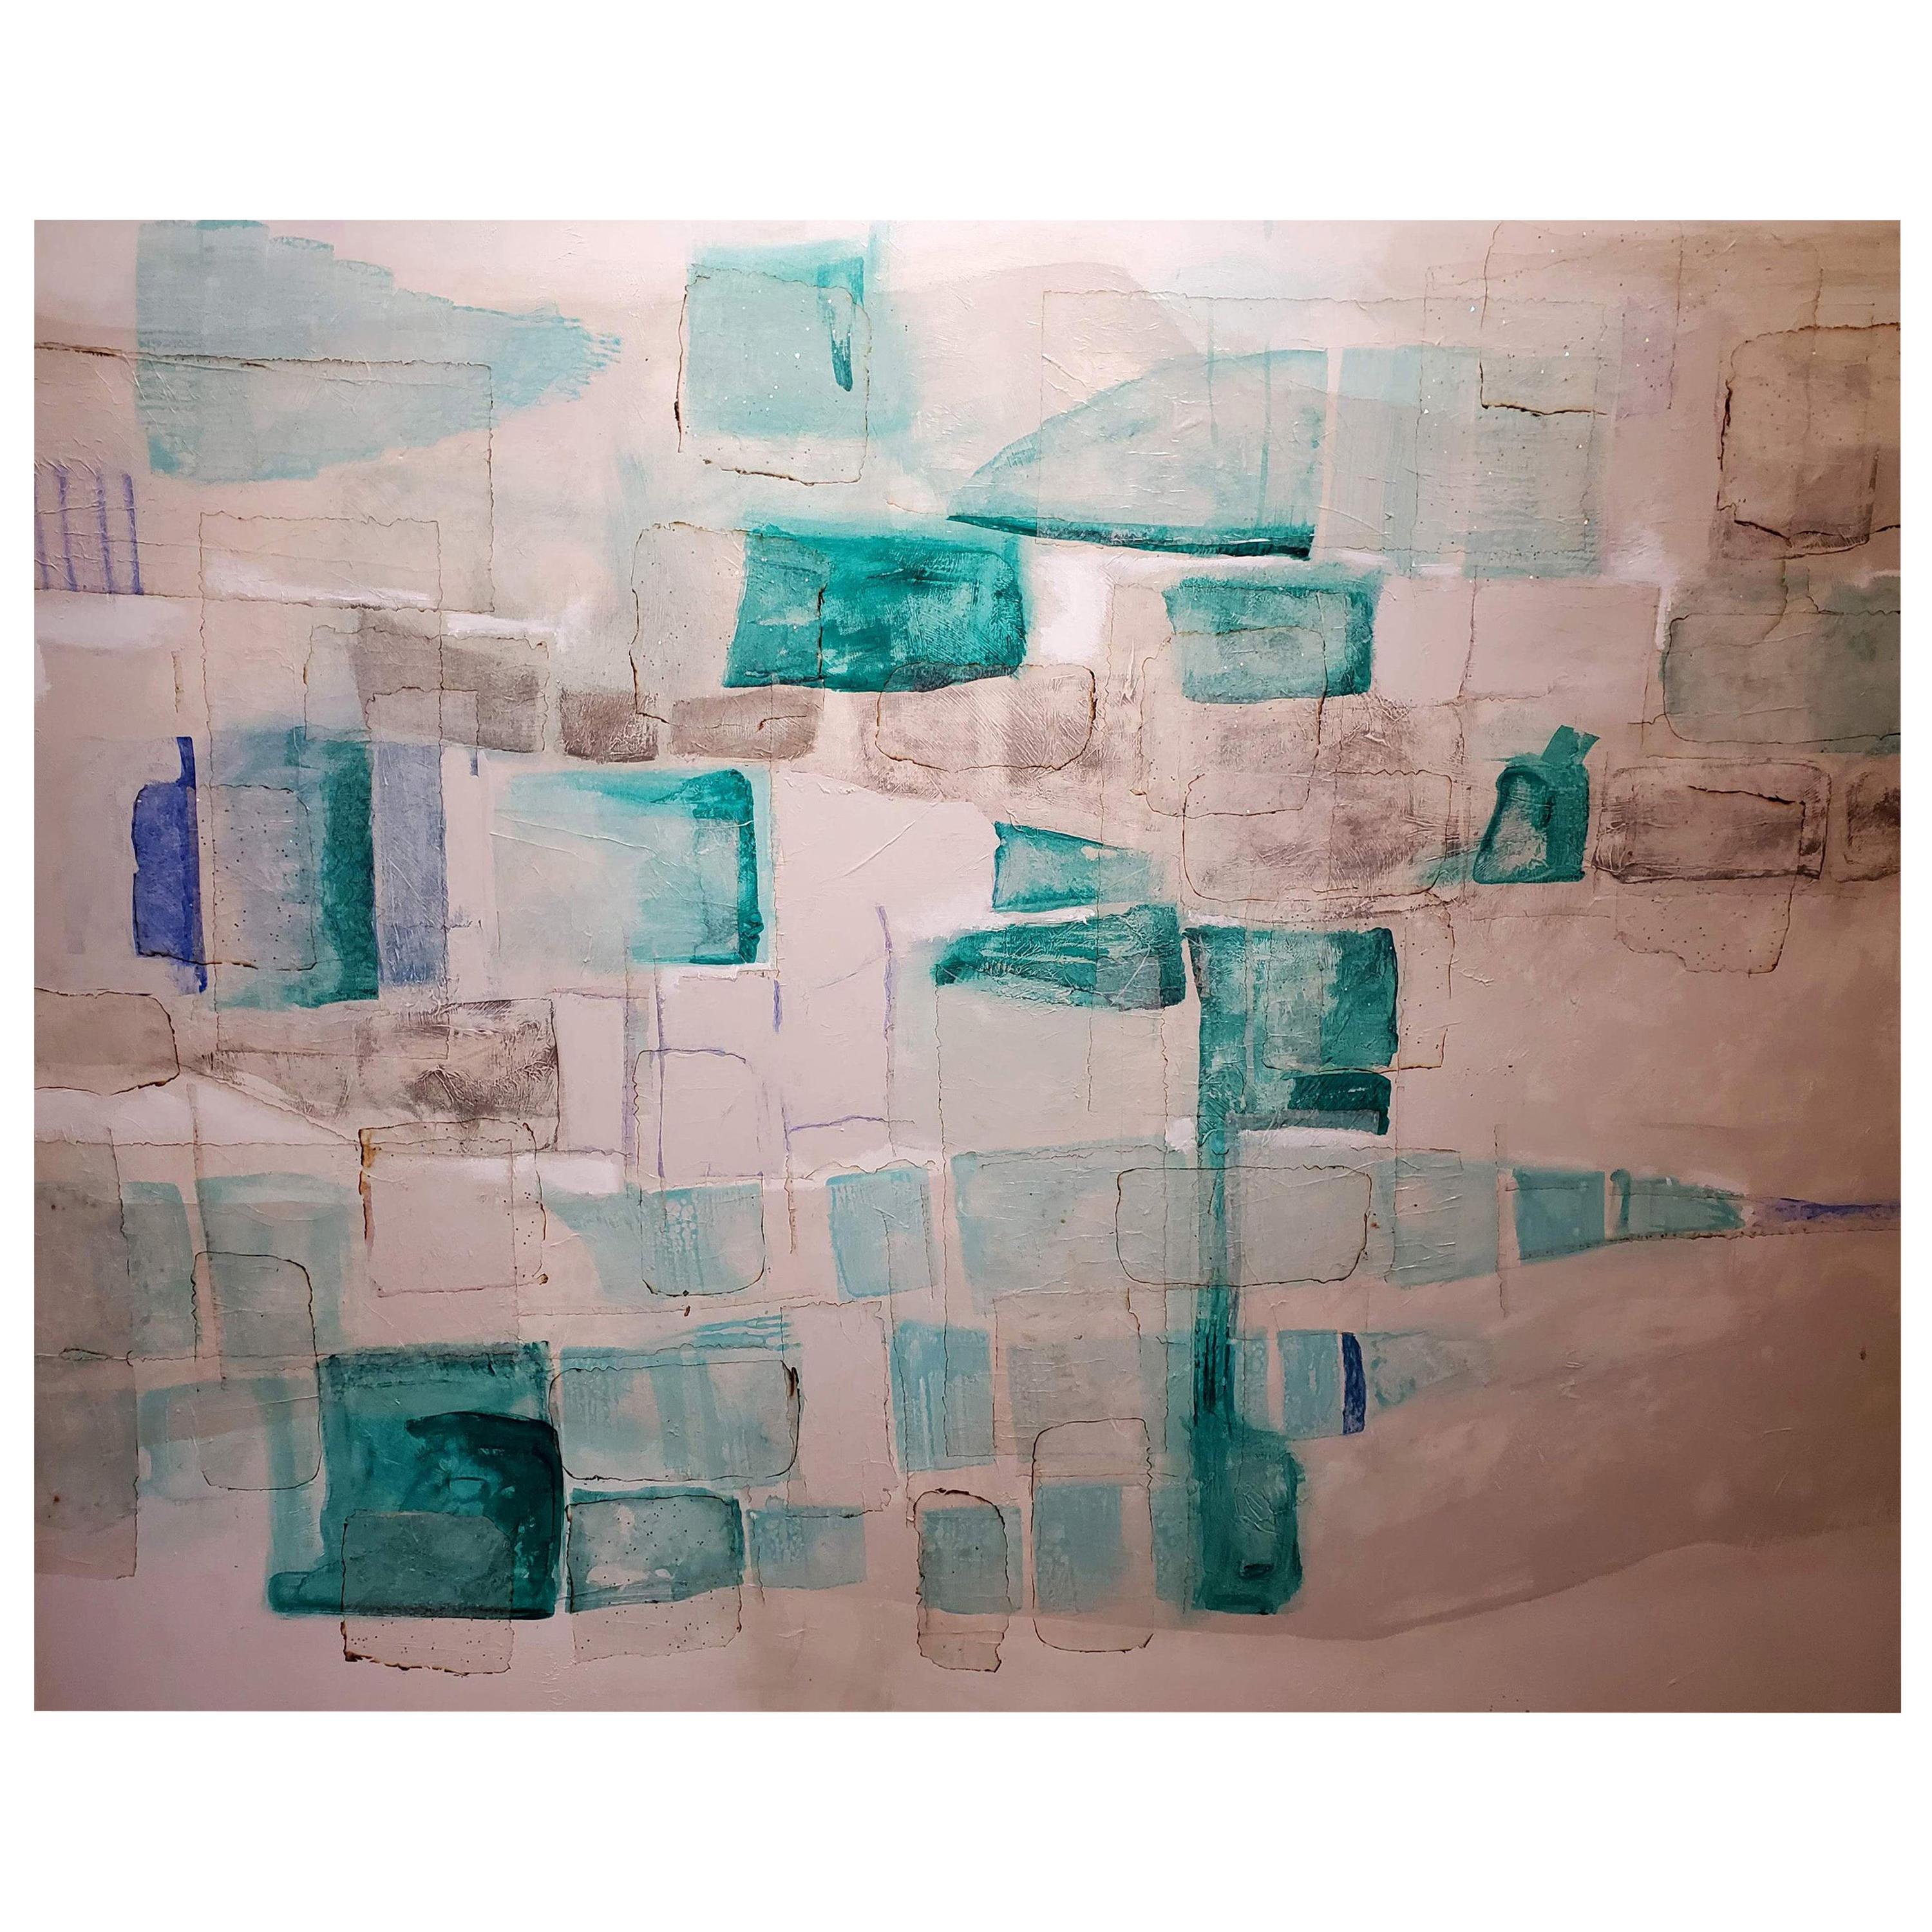 "Tsunami" Abstract Mixed-Media Painting on Canvas, Aqua, Teal, Blue, White